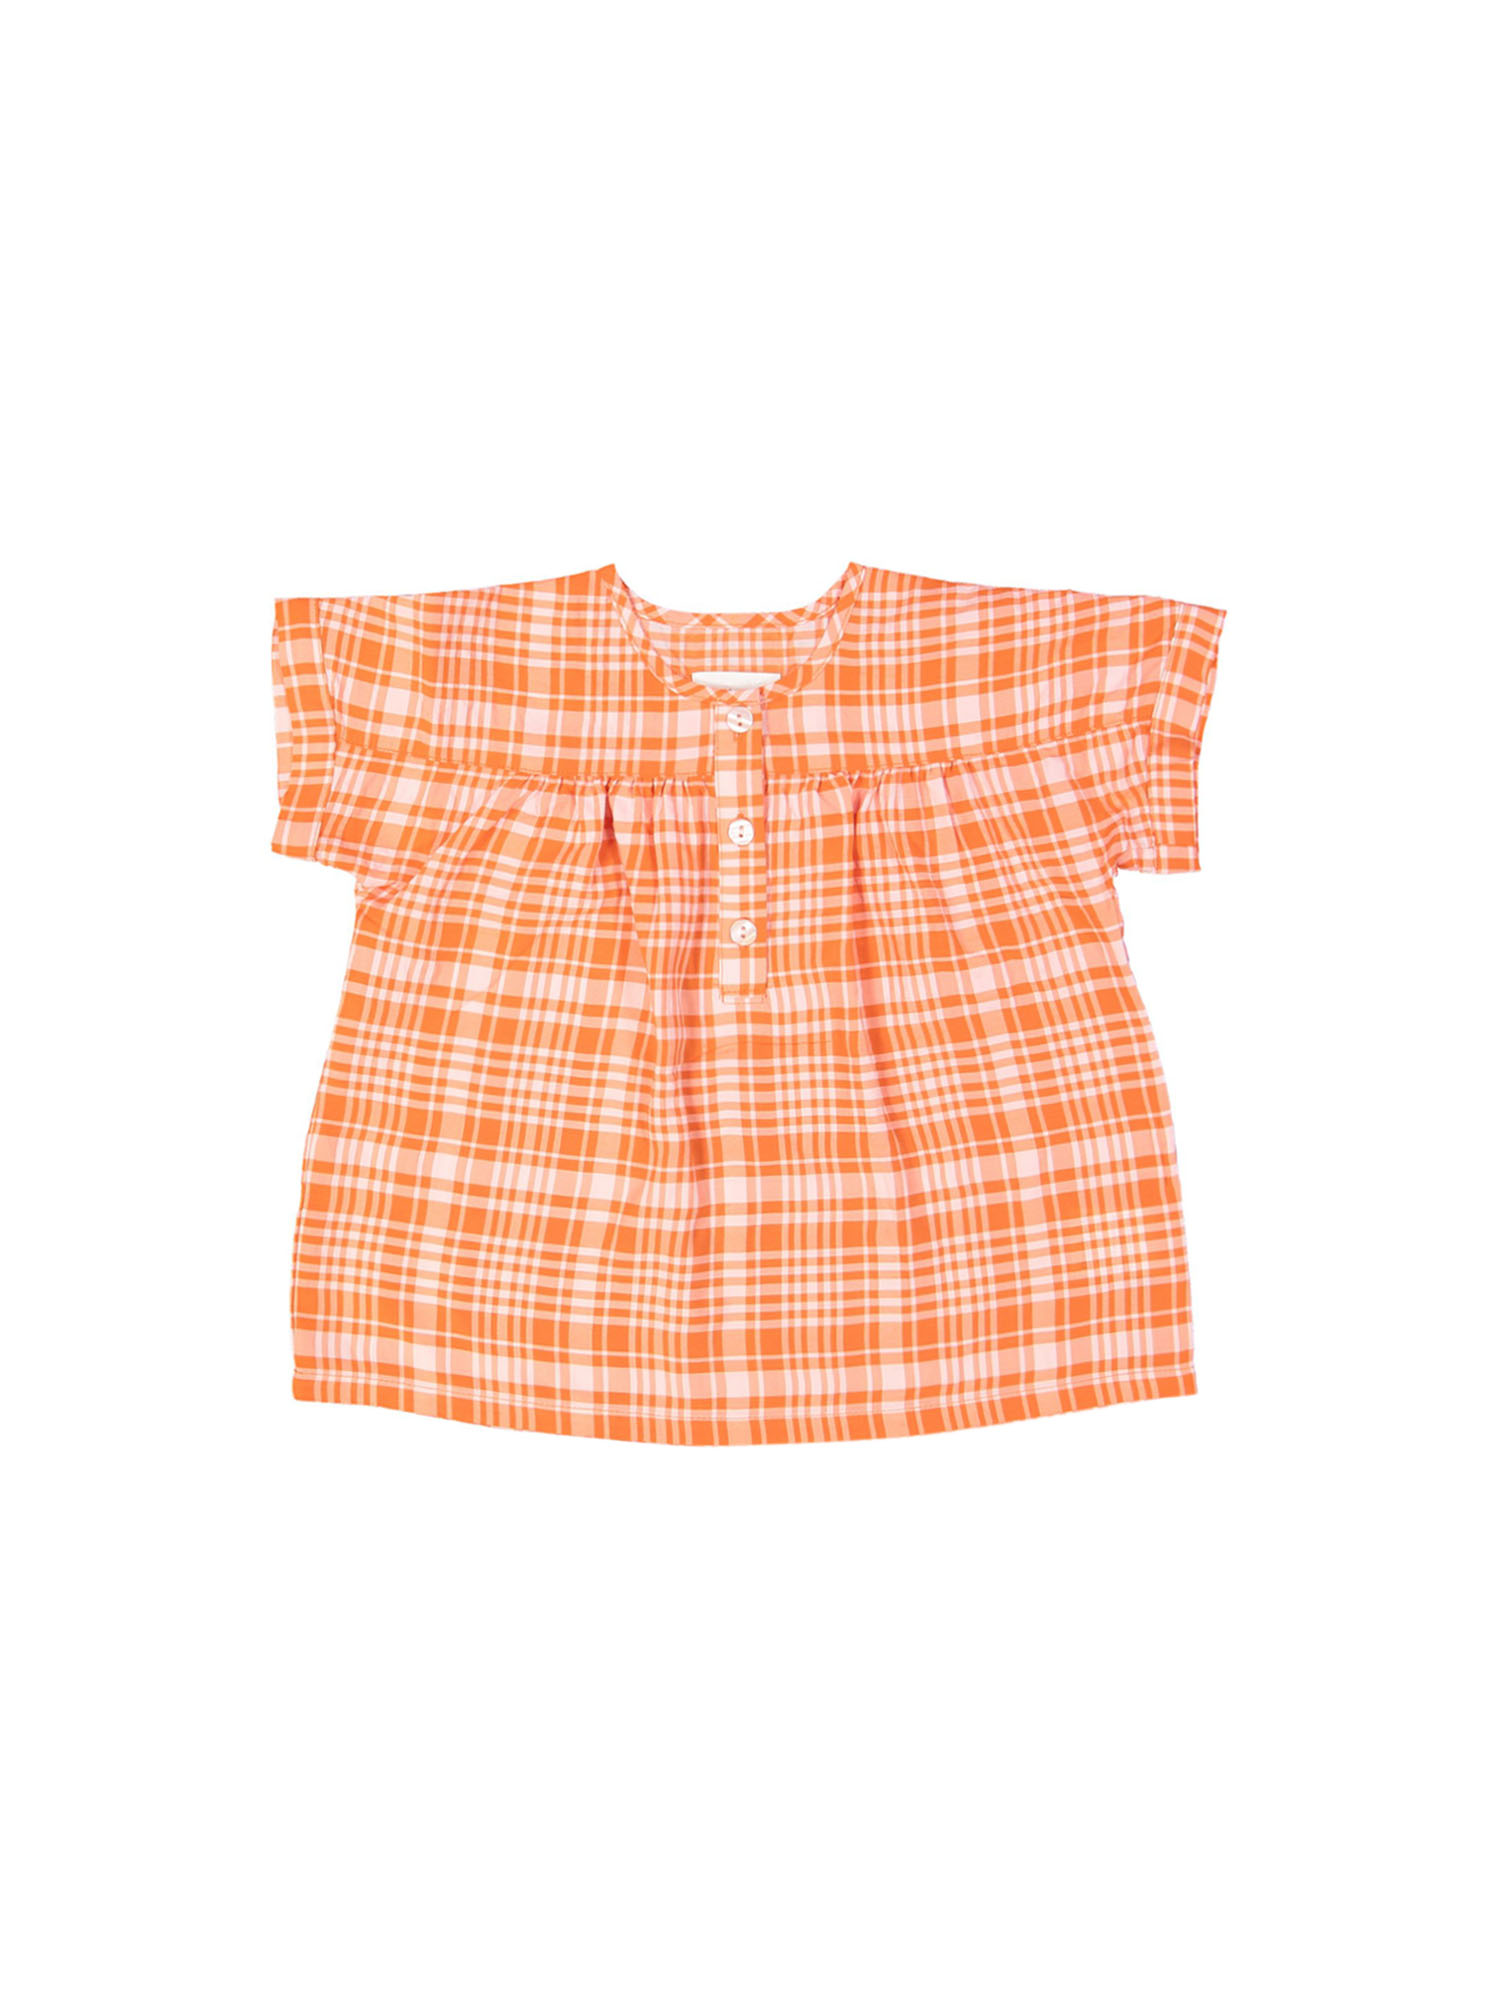 blouse plaid orange